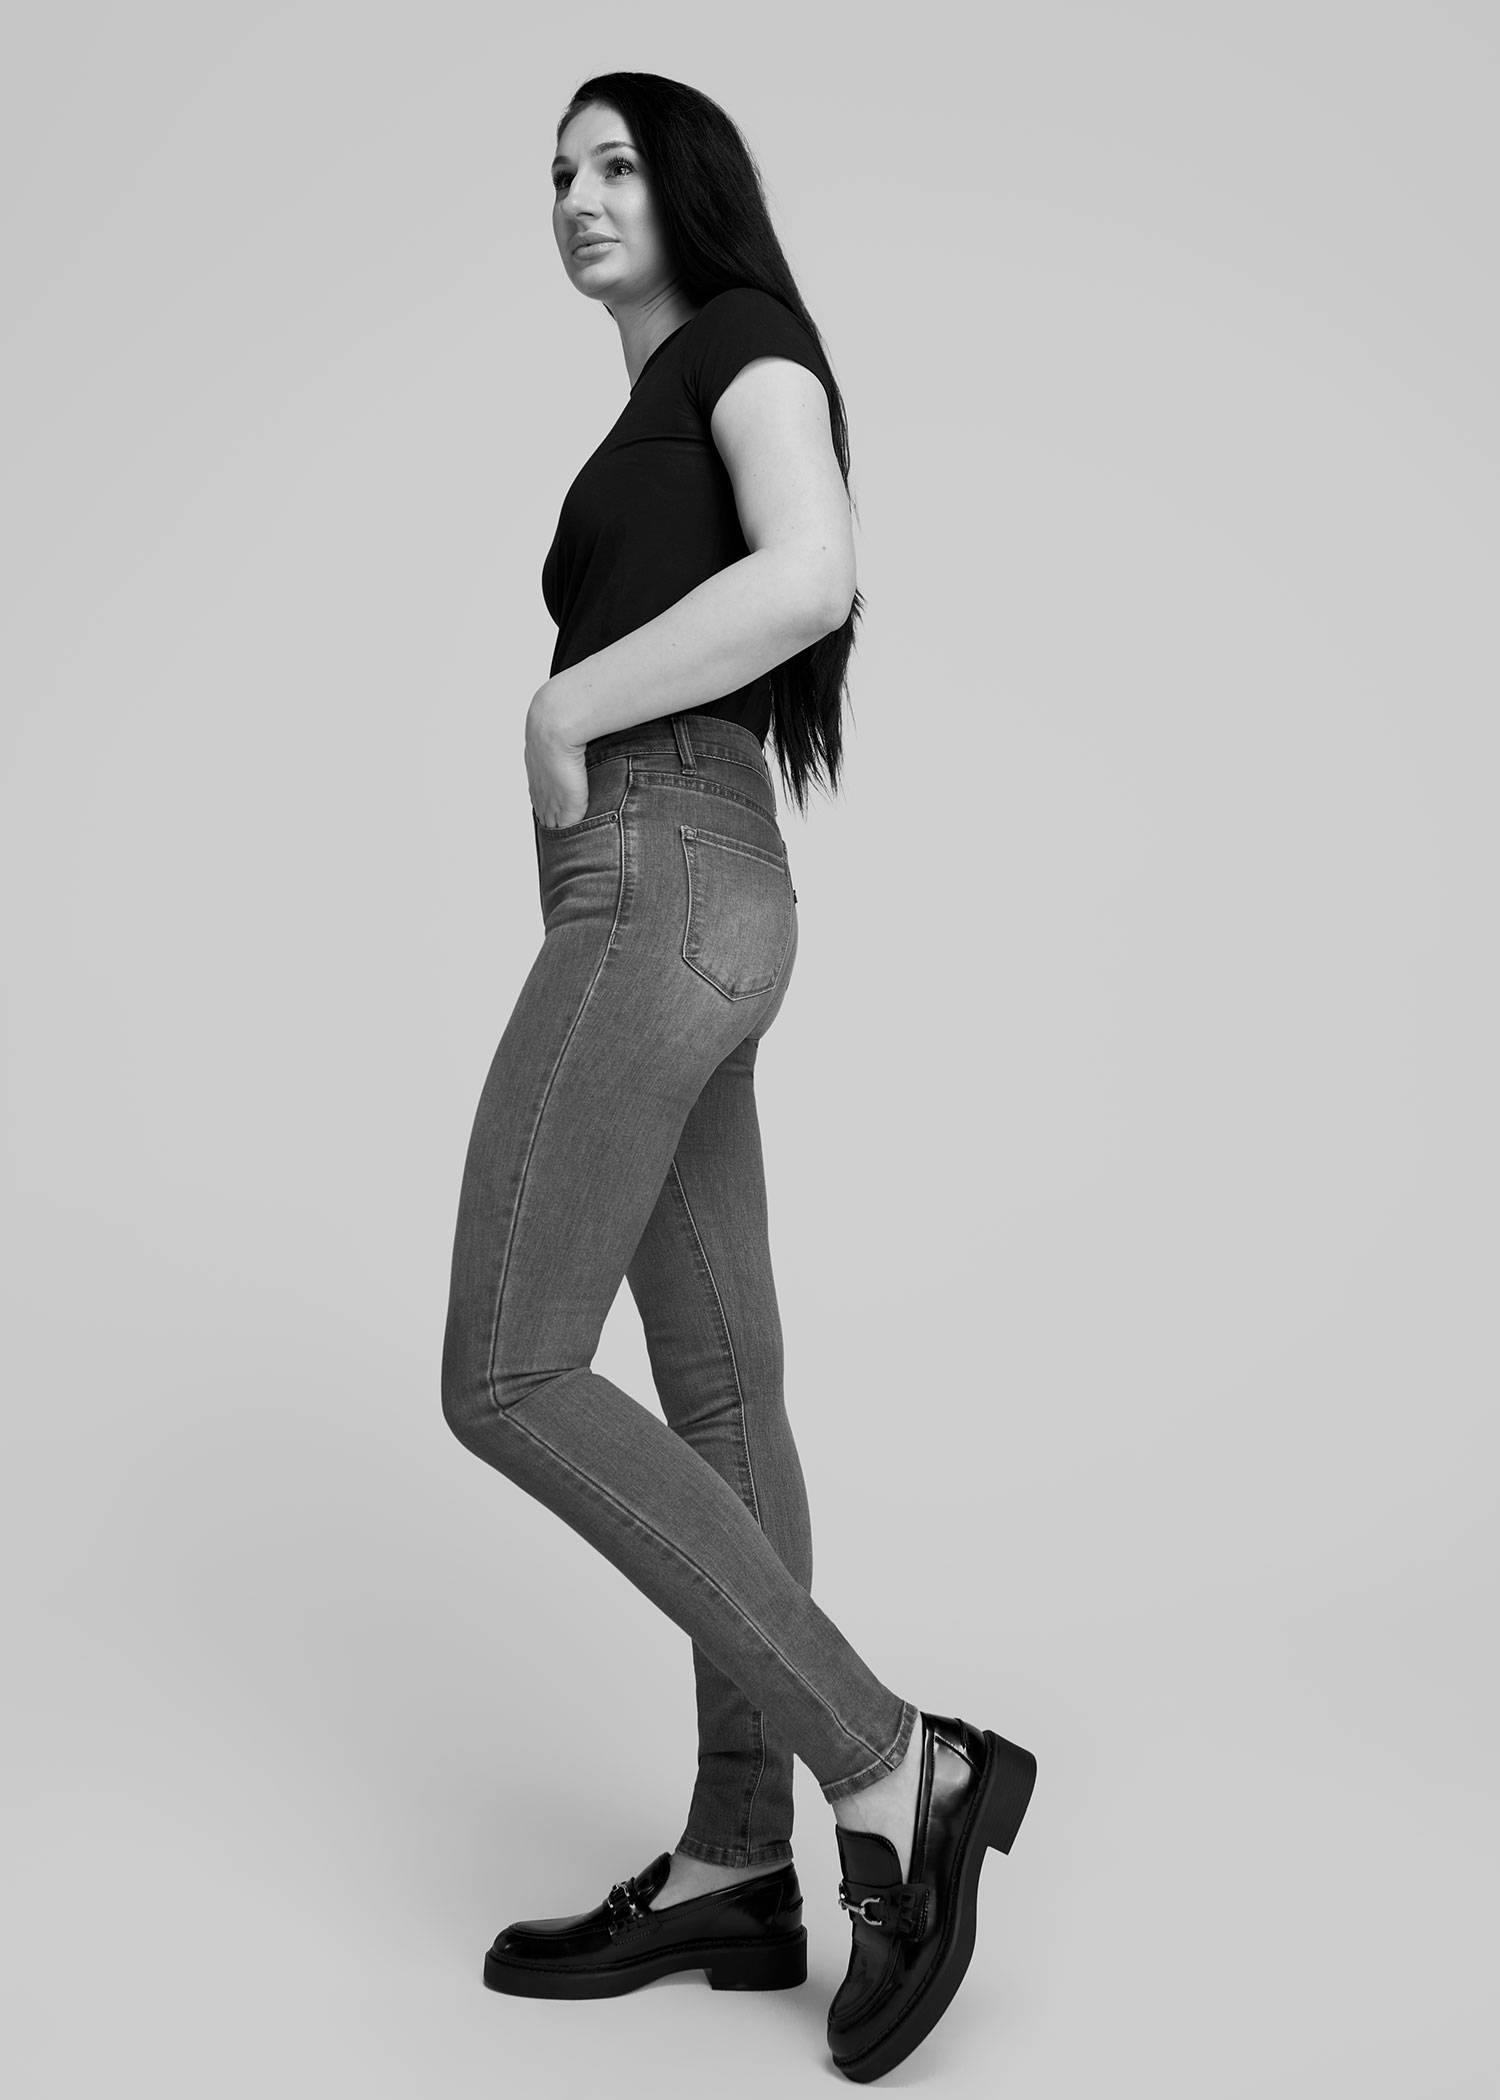 A tall woman wearing a black tee adn dark washed skinny jeans